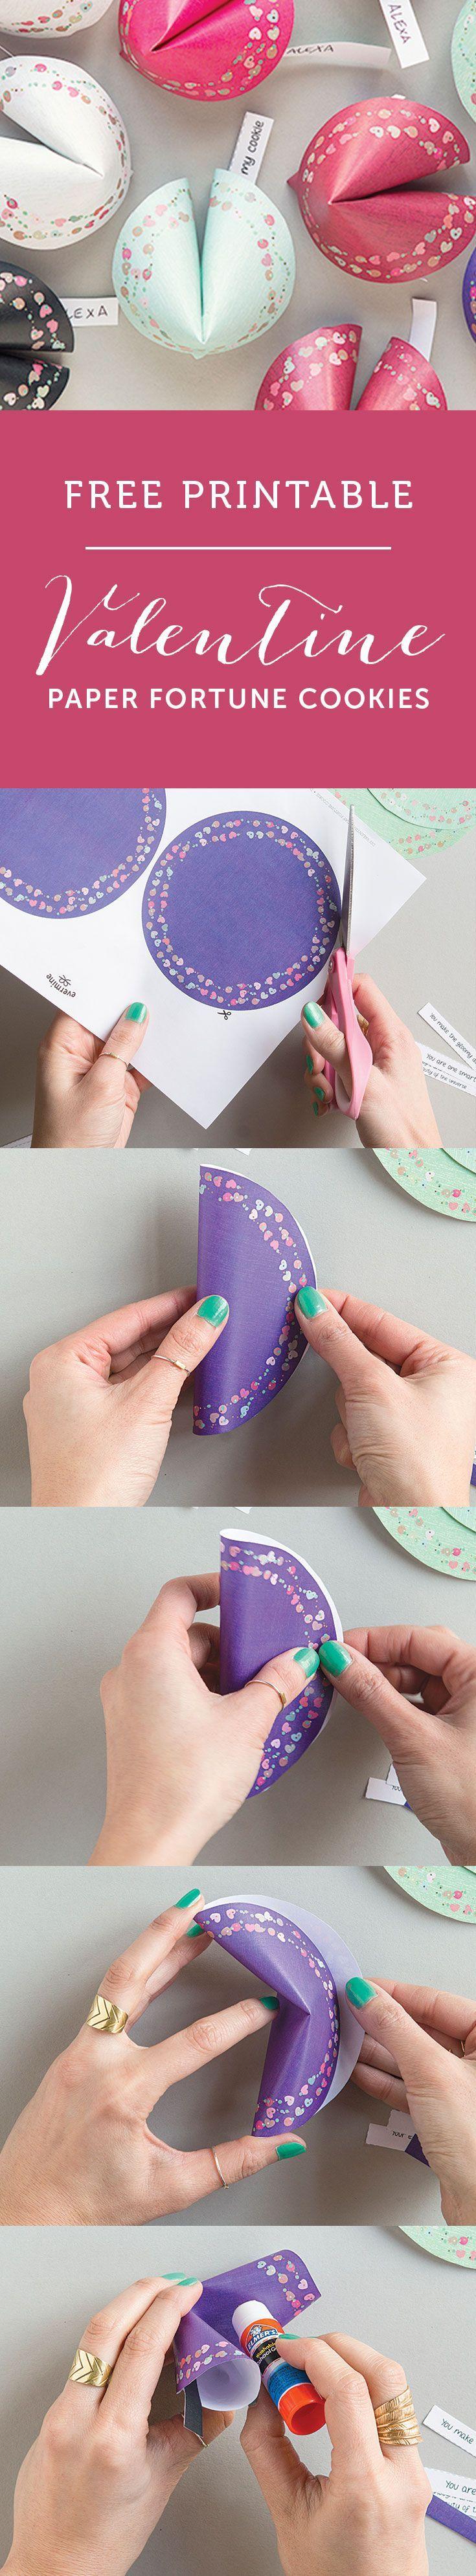 Hochzeit - Free Printable Valentine Paper Fortune Cookies - Gift & Favor Ideas From Evermine